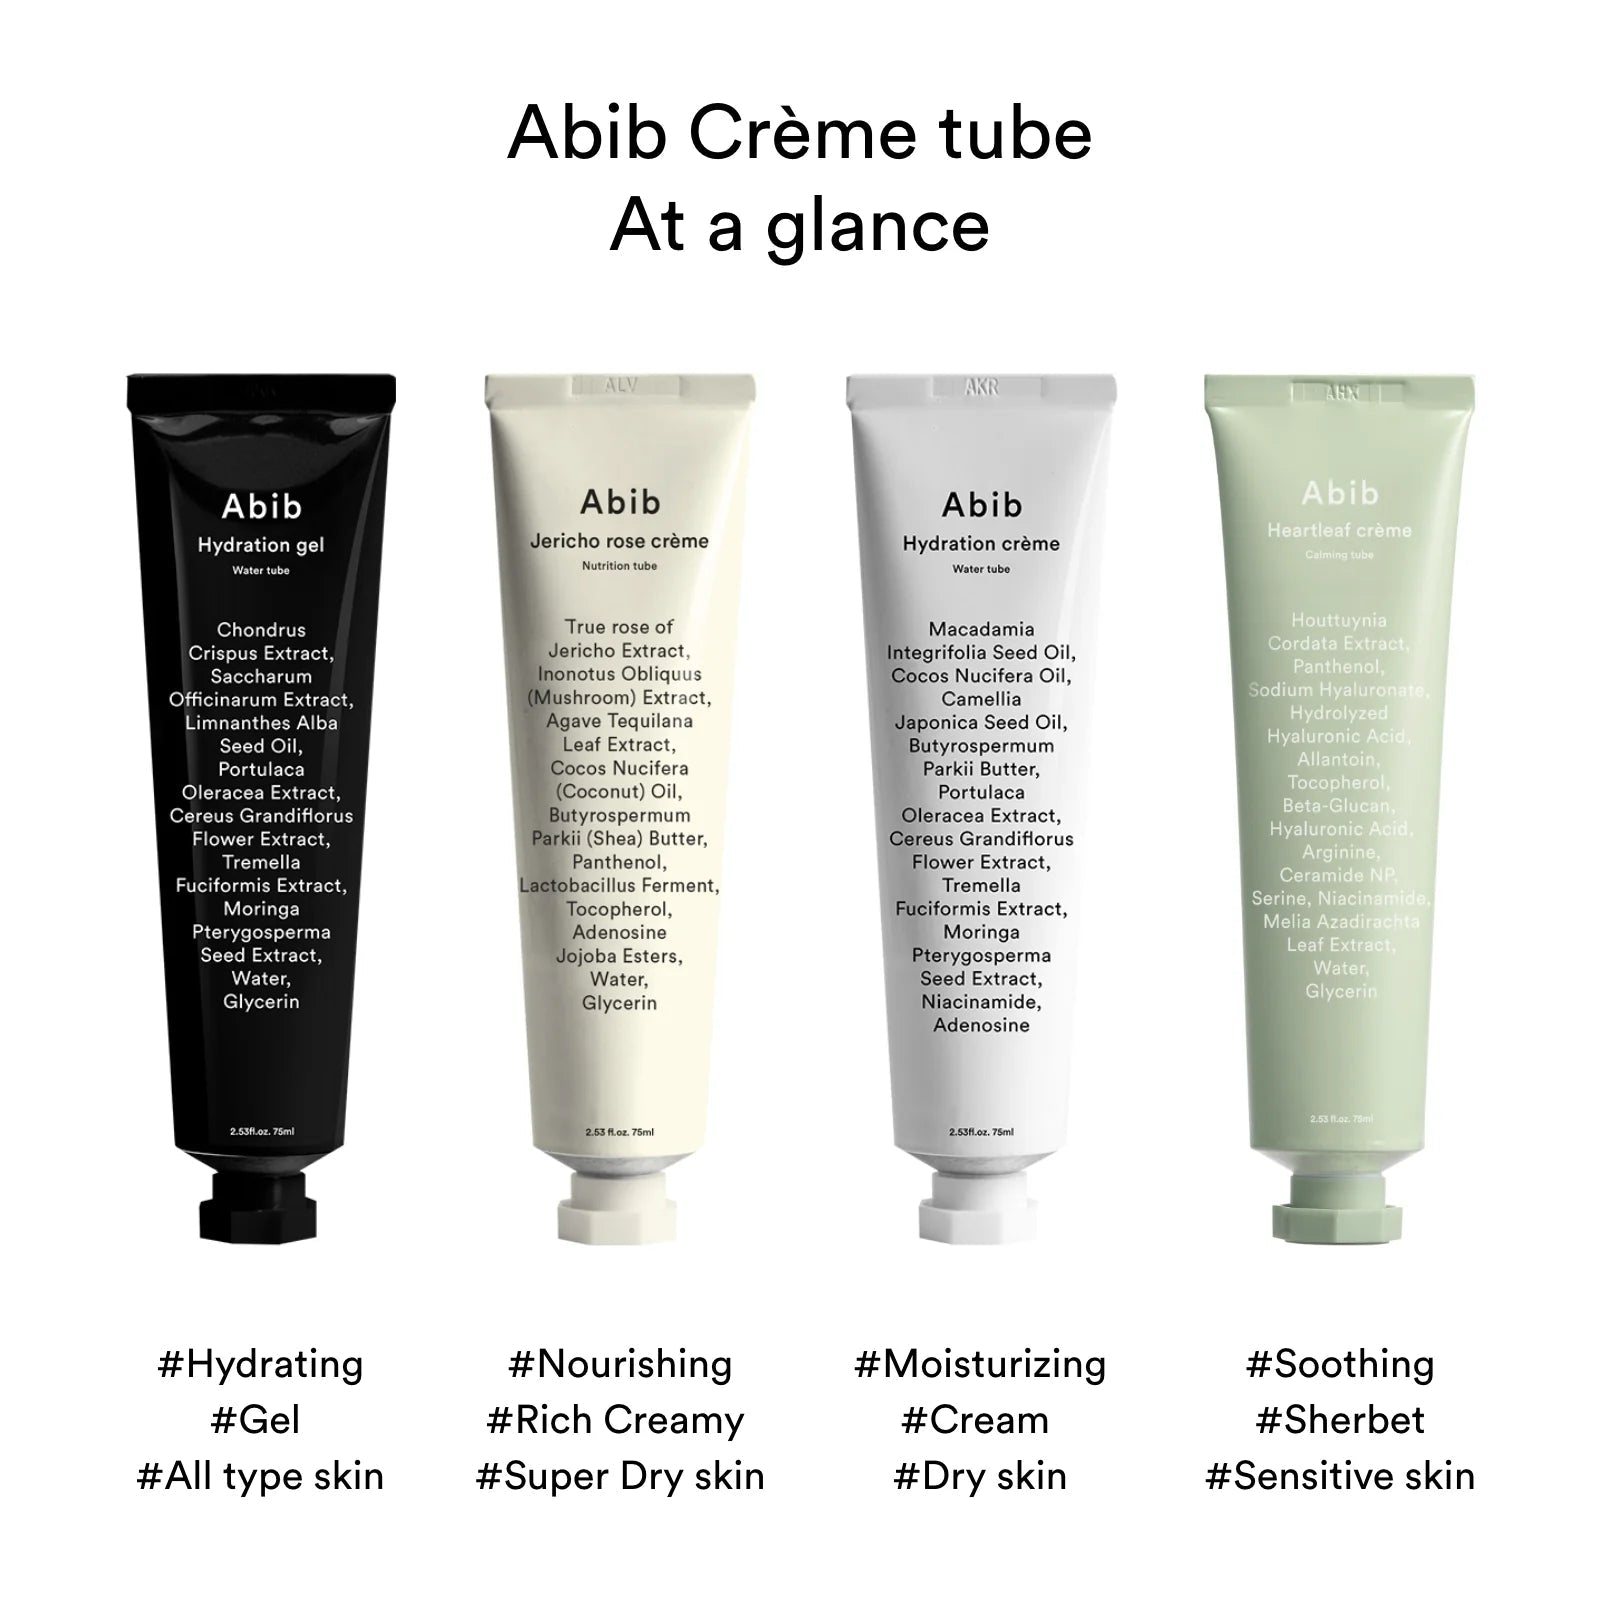 Abib Heartleaf Cream Calming Tube 75ml - Abib | Kiokii and...